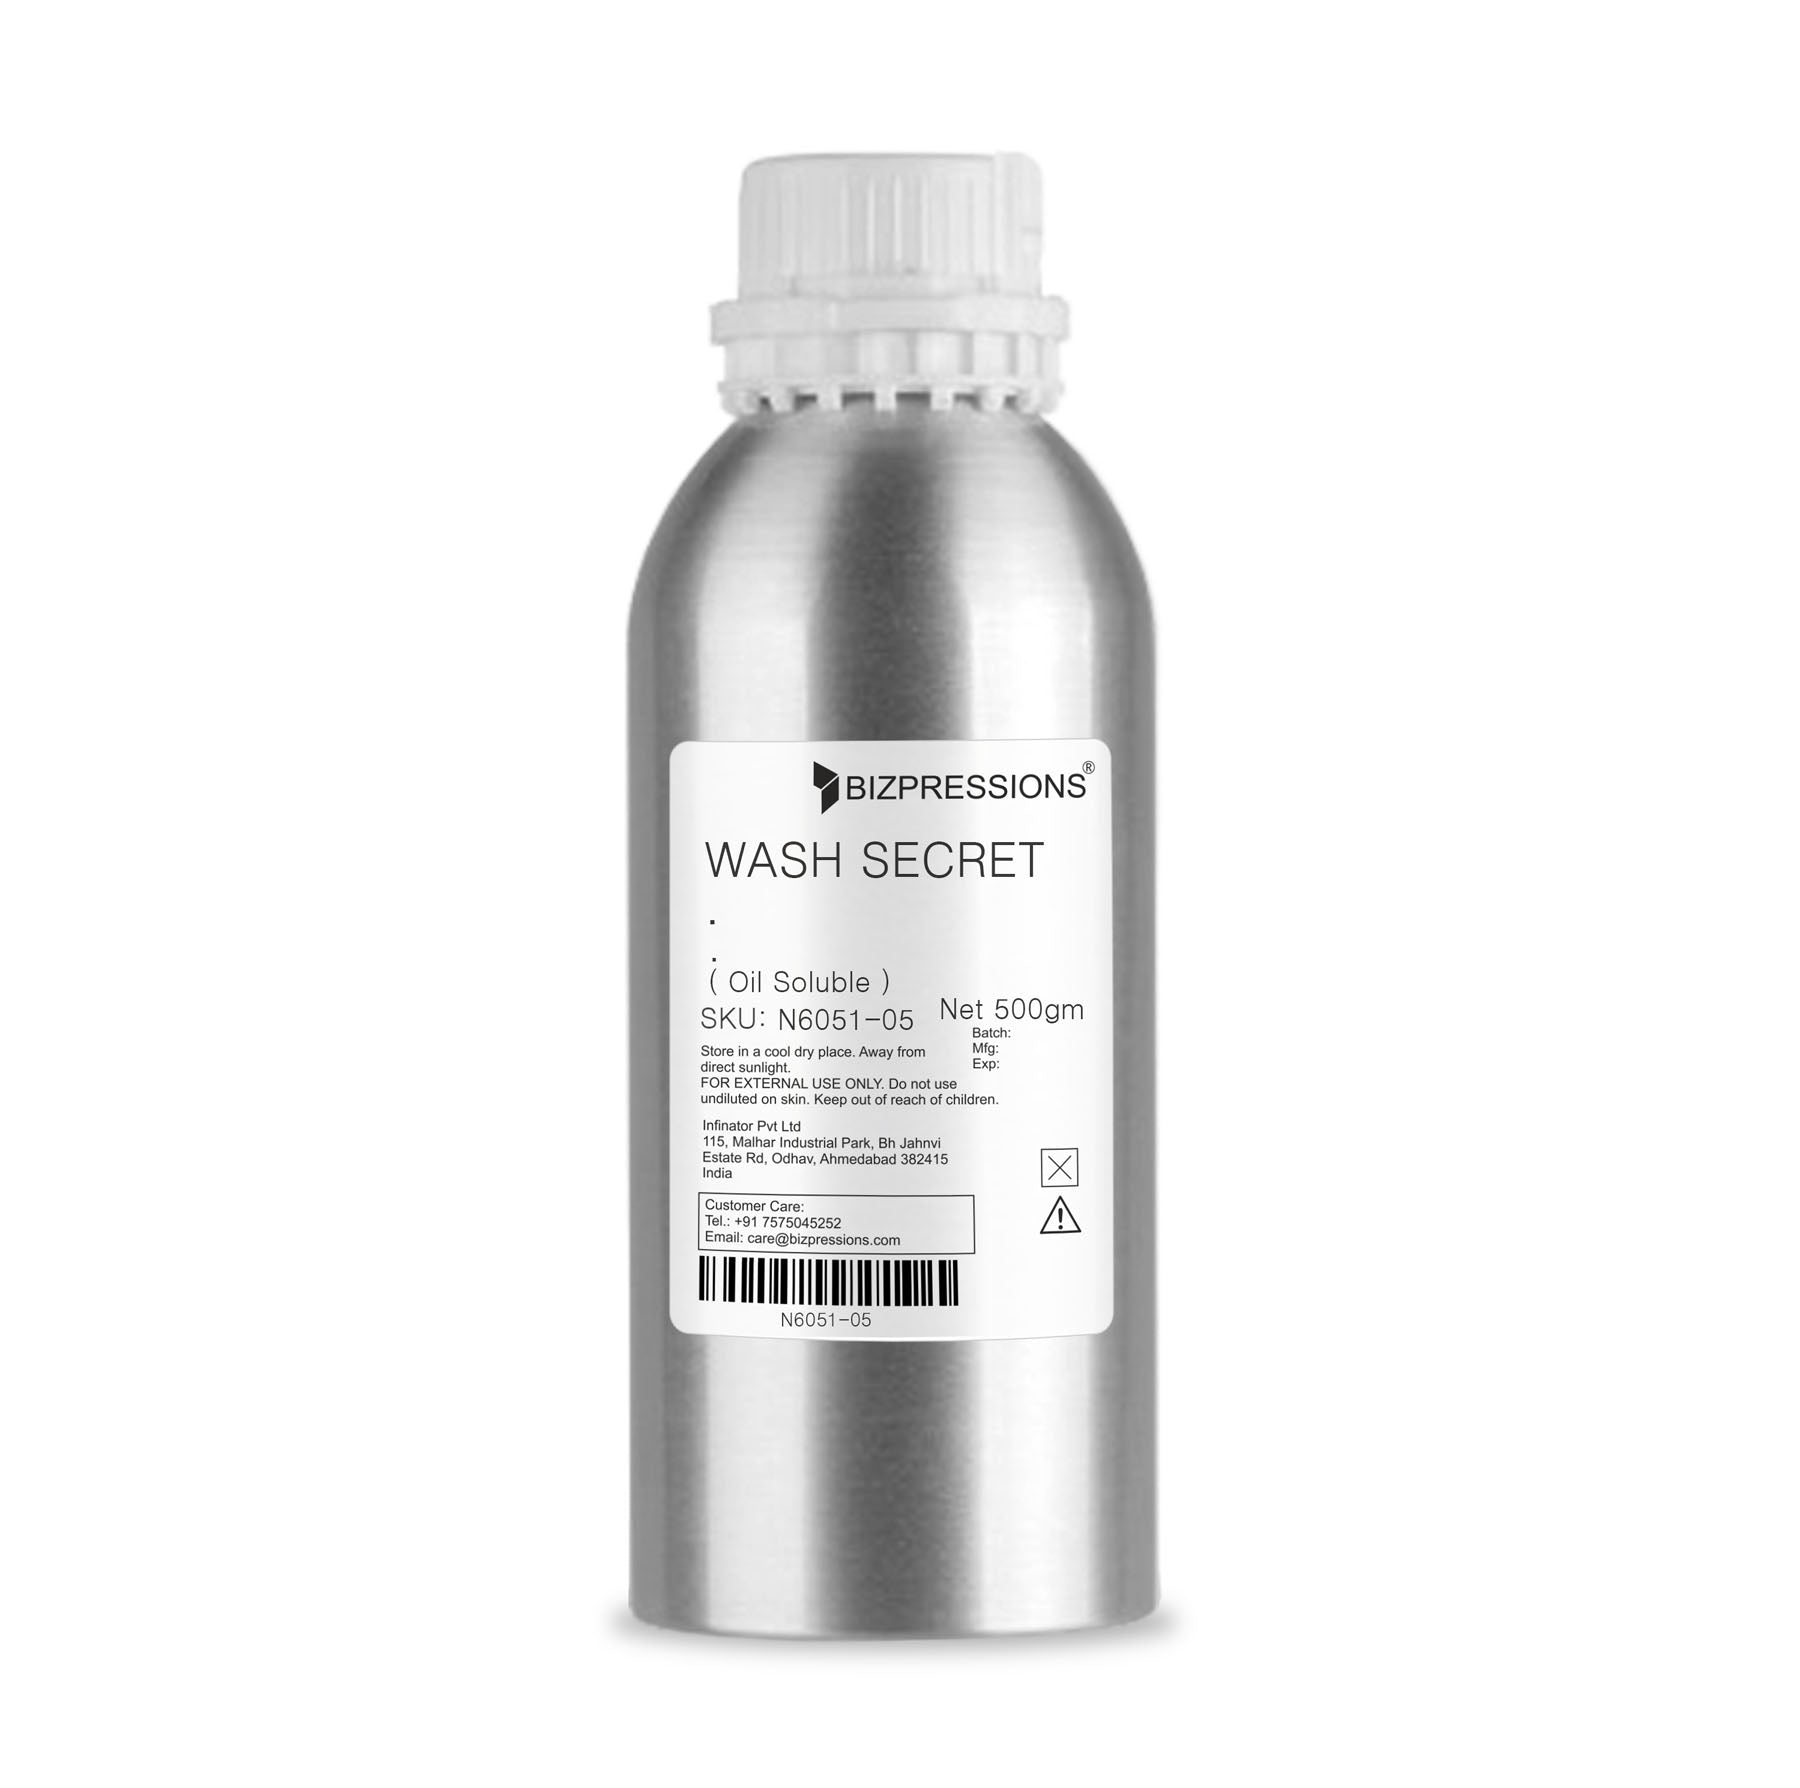 WASH SECRET - Fragrance ( Oil Soluble ) - 500 gm